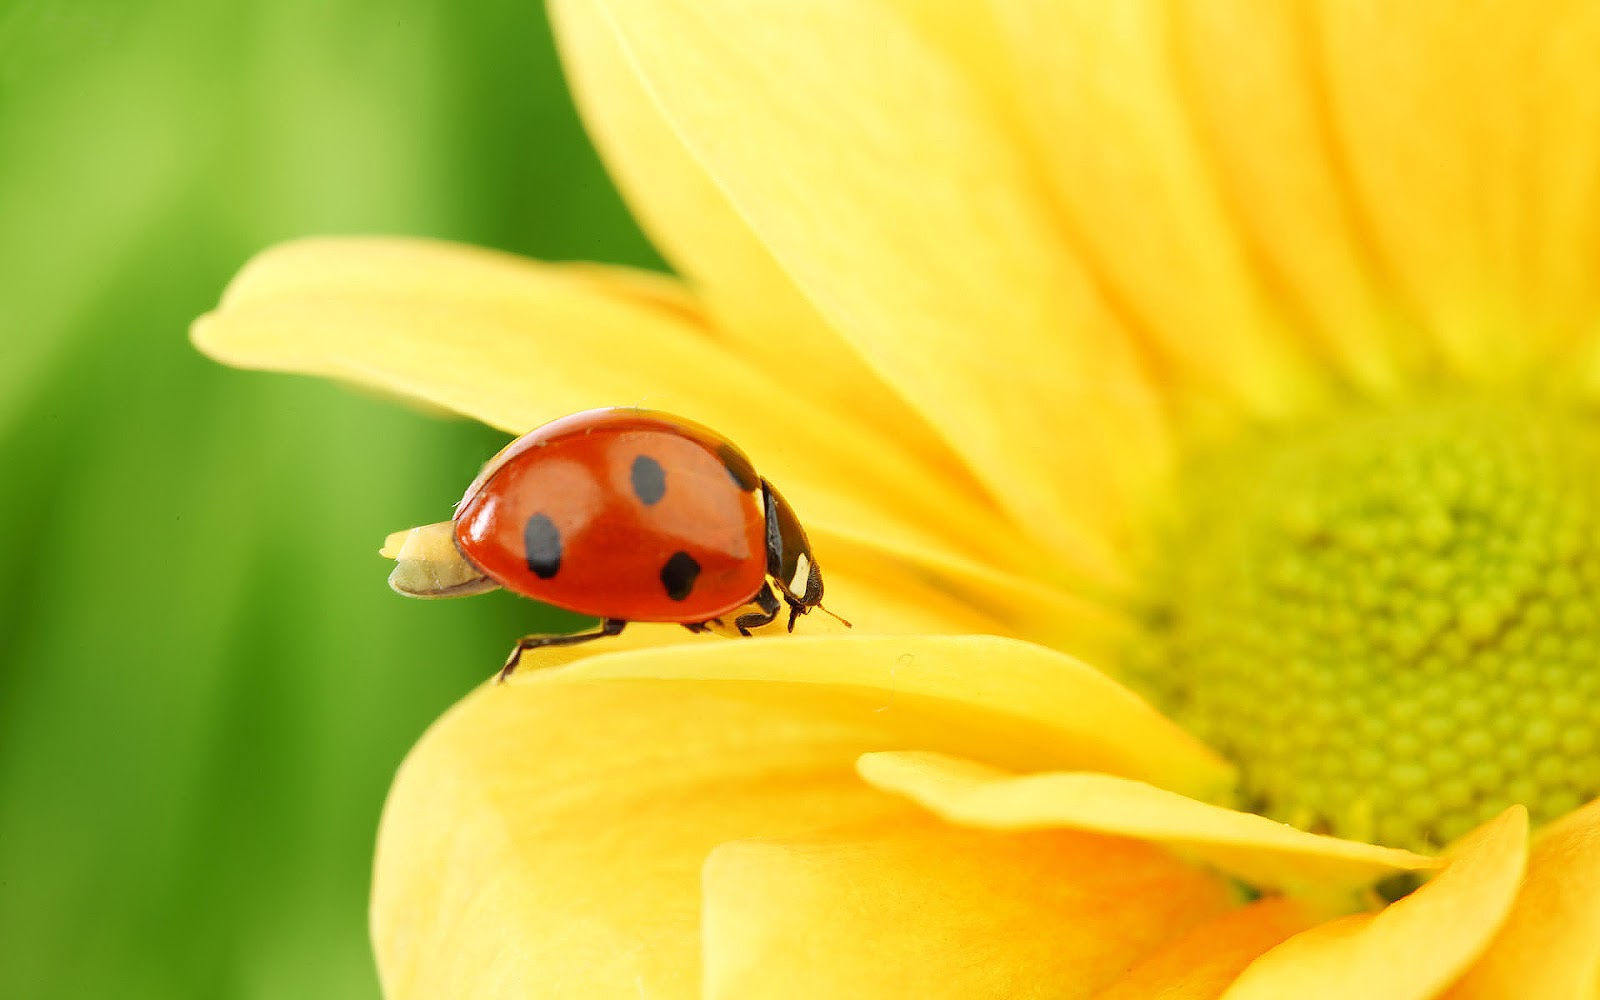 hd ladybug wallpaper with a ladybug on a yellow flower hd ladybugs